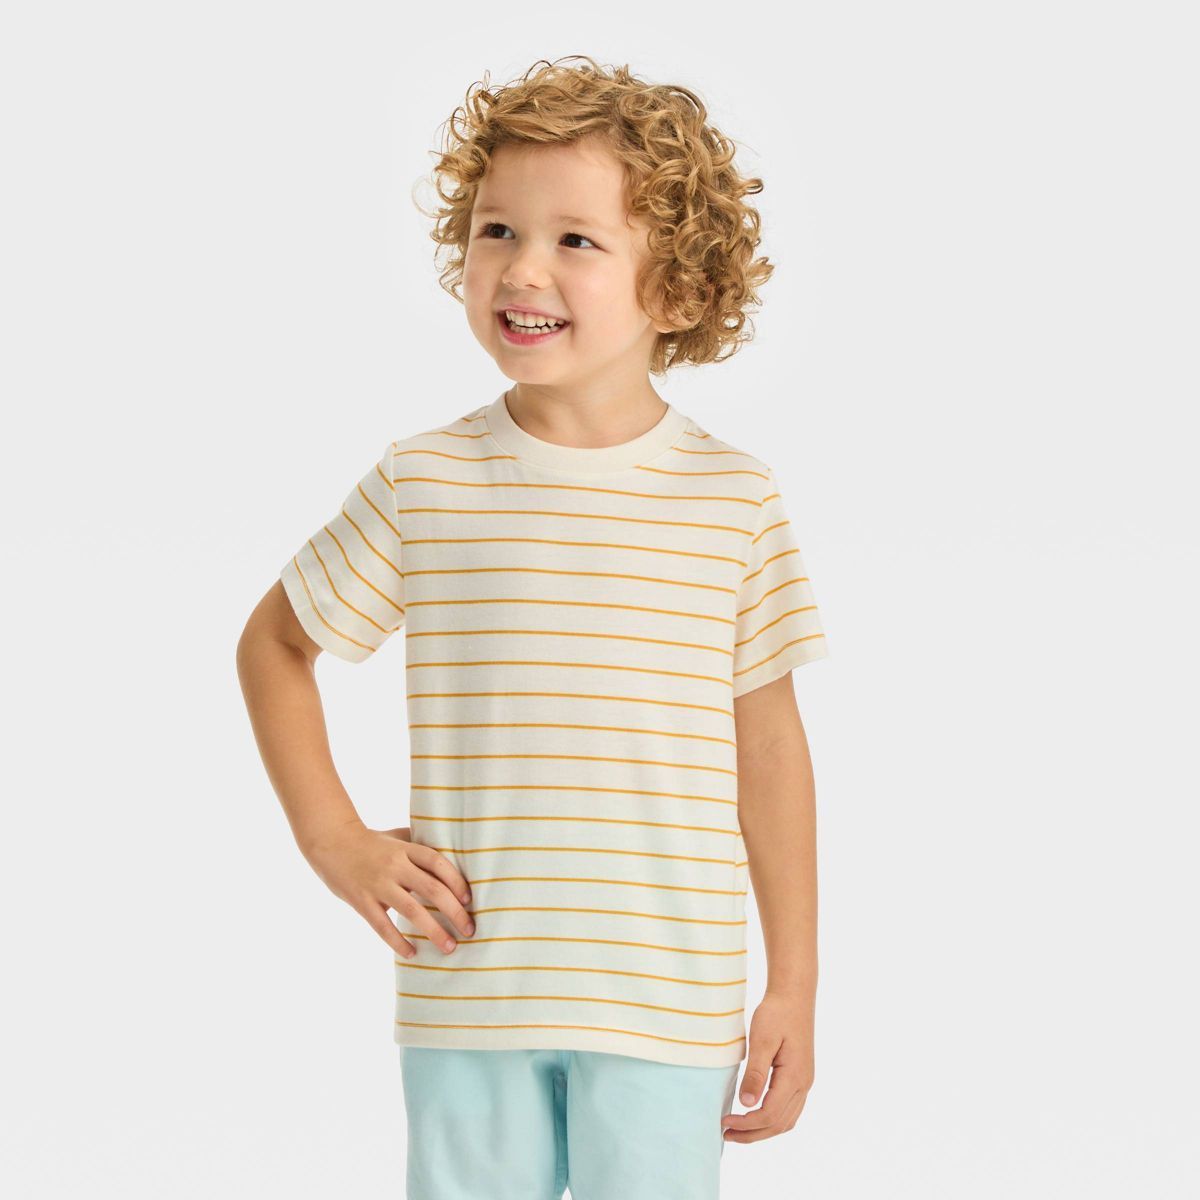 Toddler Boys' Short Sleeve Jersey Knit T-Shirt - Cat & Jack™ Mustard Yellow 3T | Target